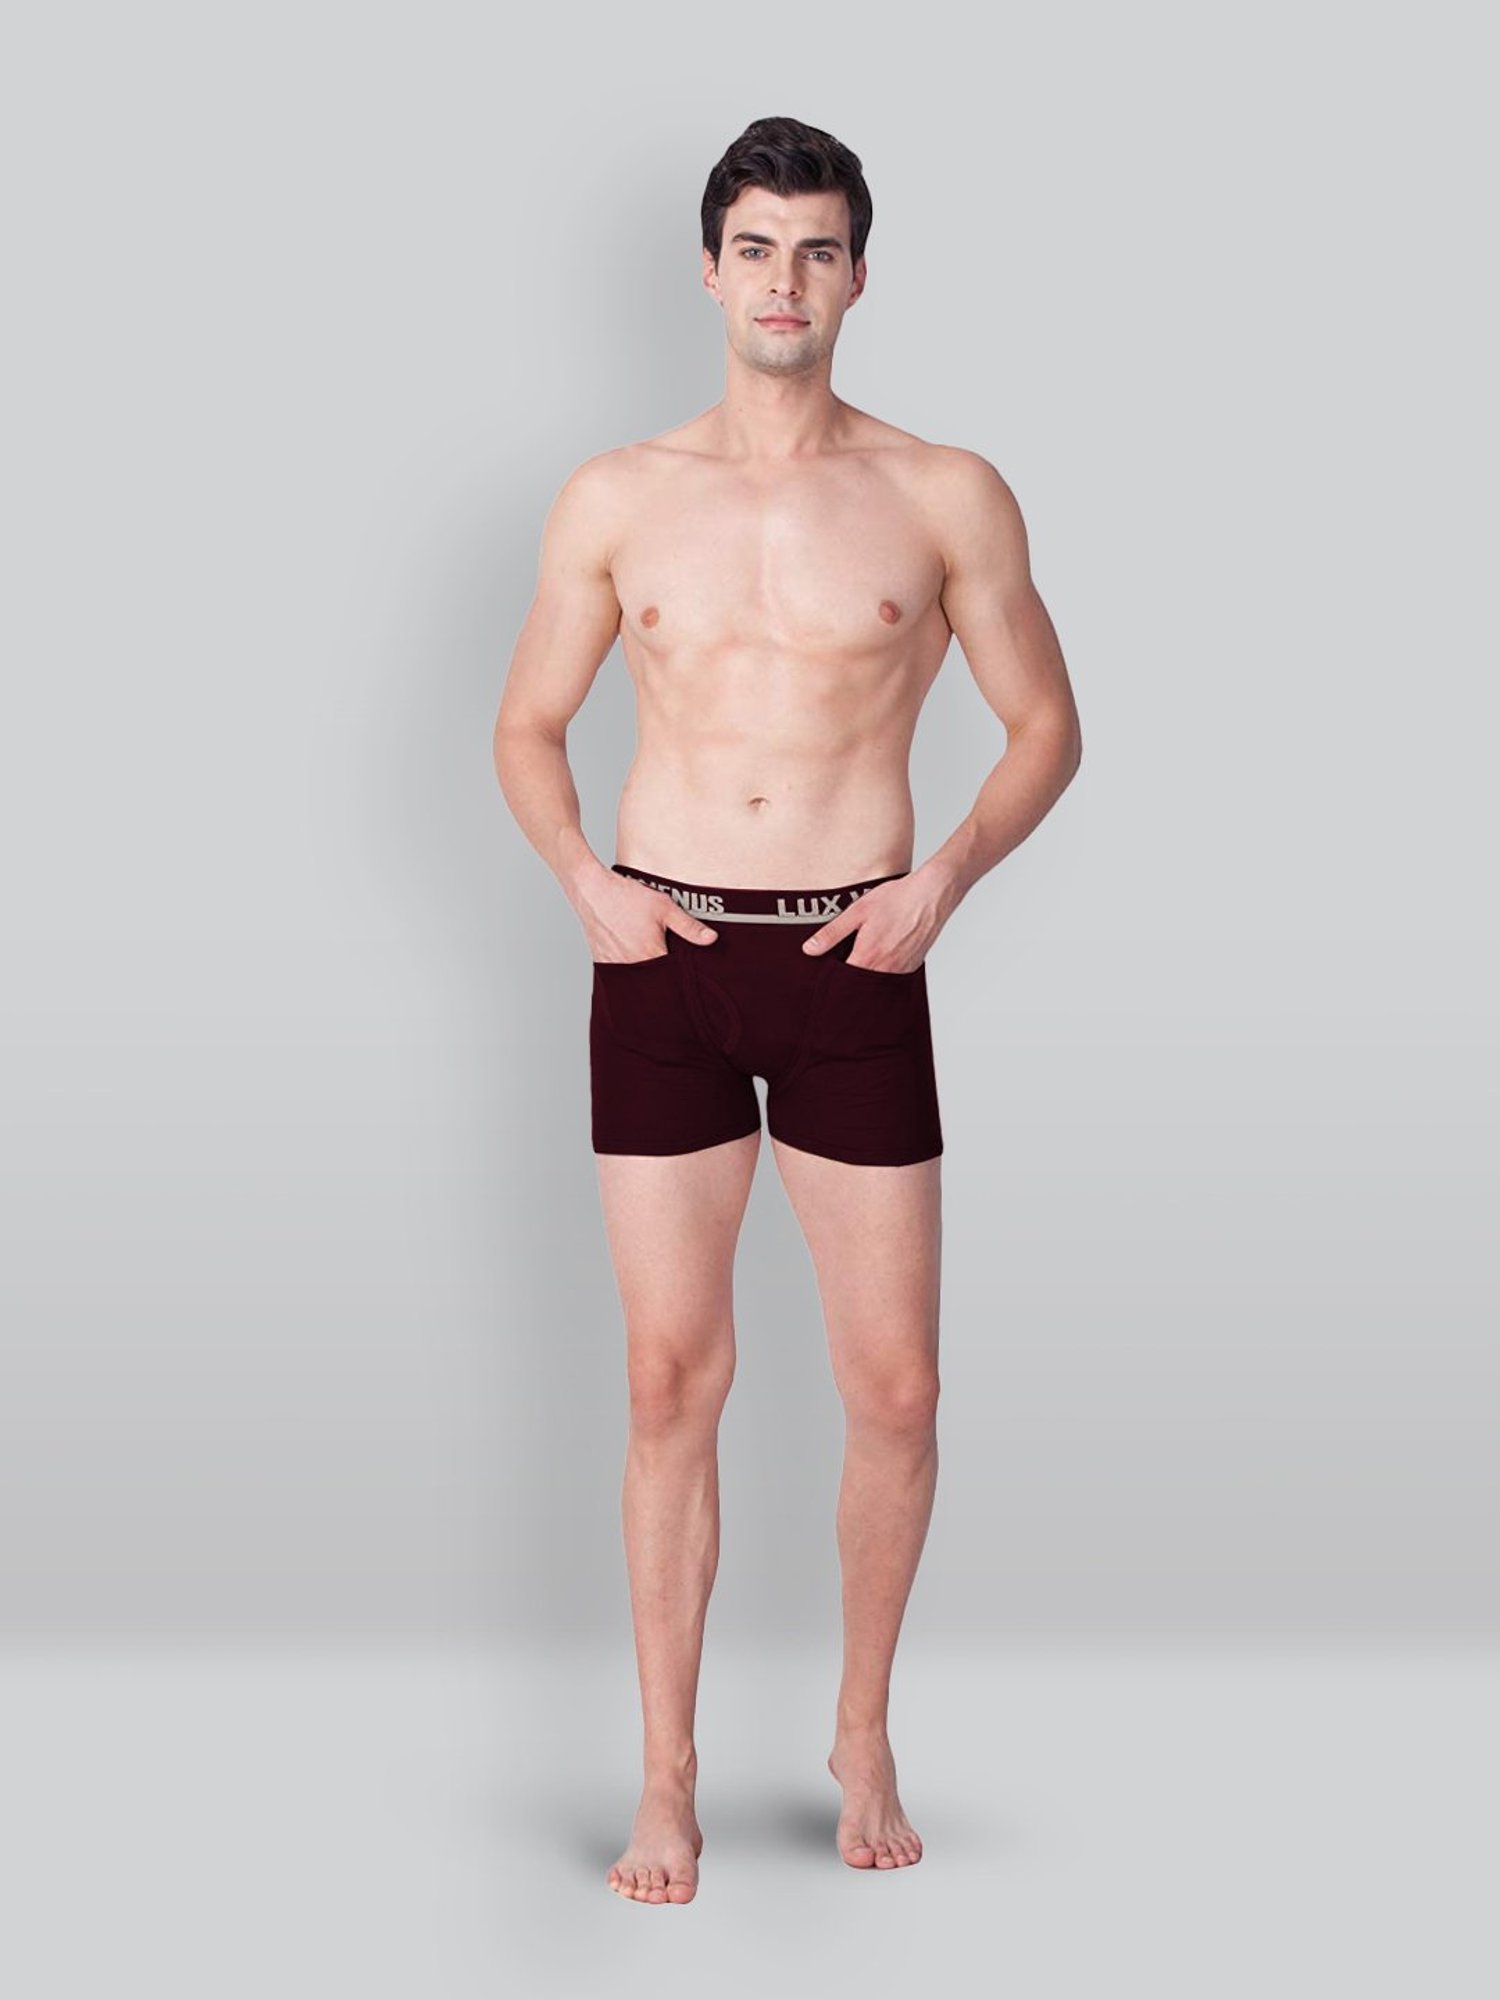 Lux Venus Men Underwear Trunks Pack of 2pcs – Al Azhar Kuwait